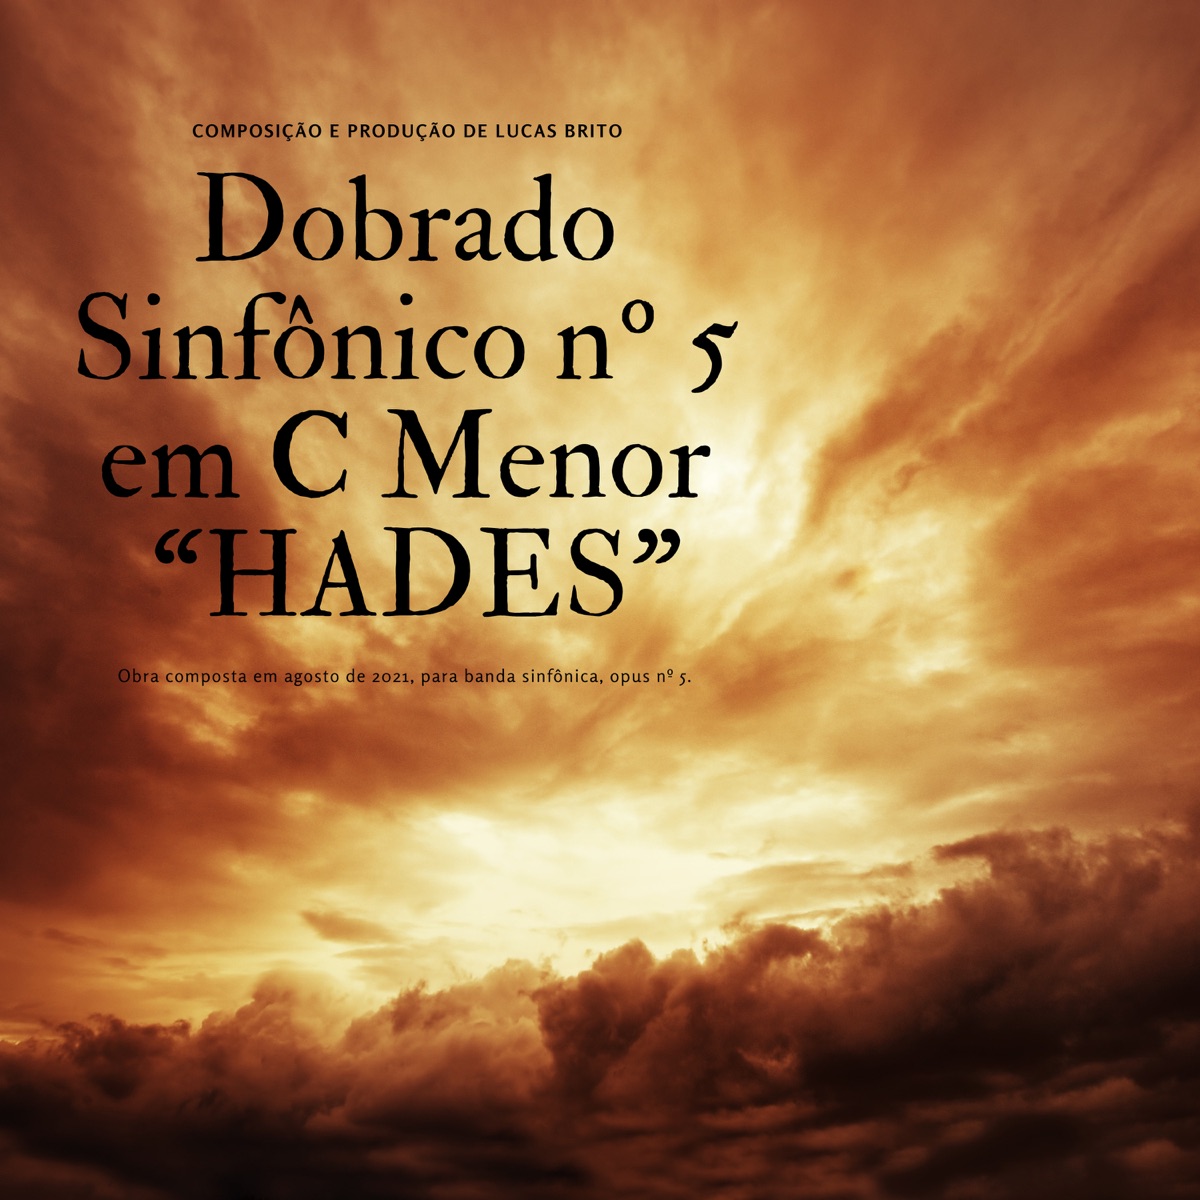 Dobrado Suboficial Valderlandes (Remix) - Single - Album by Lucas Brito -  Apple Music